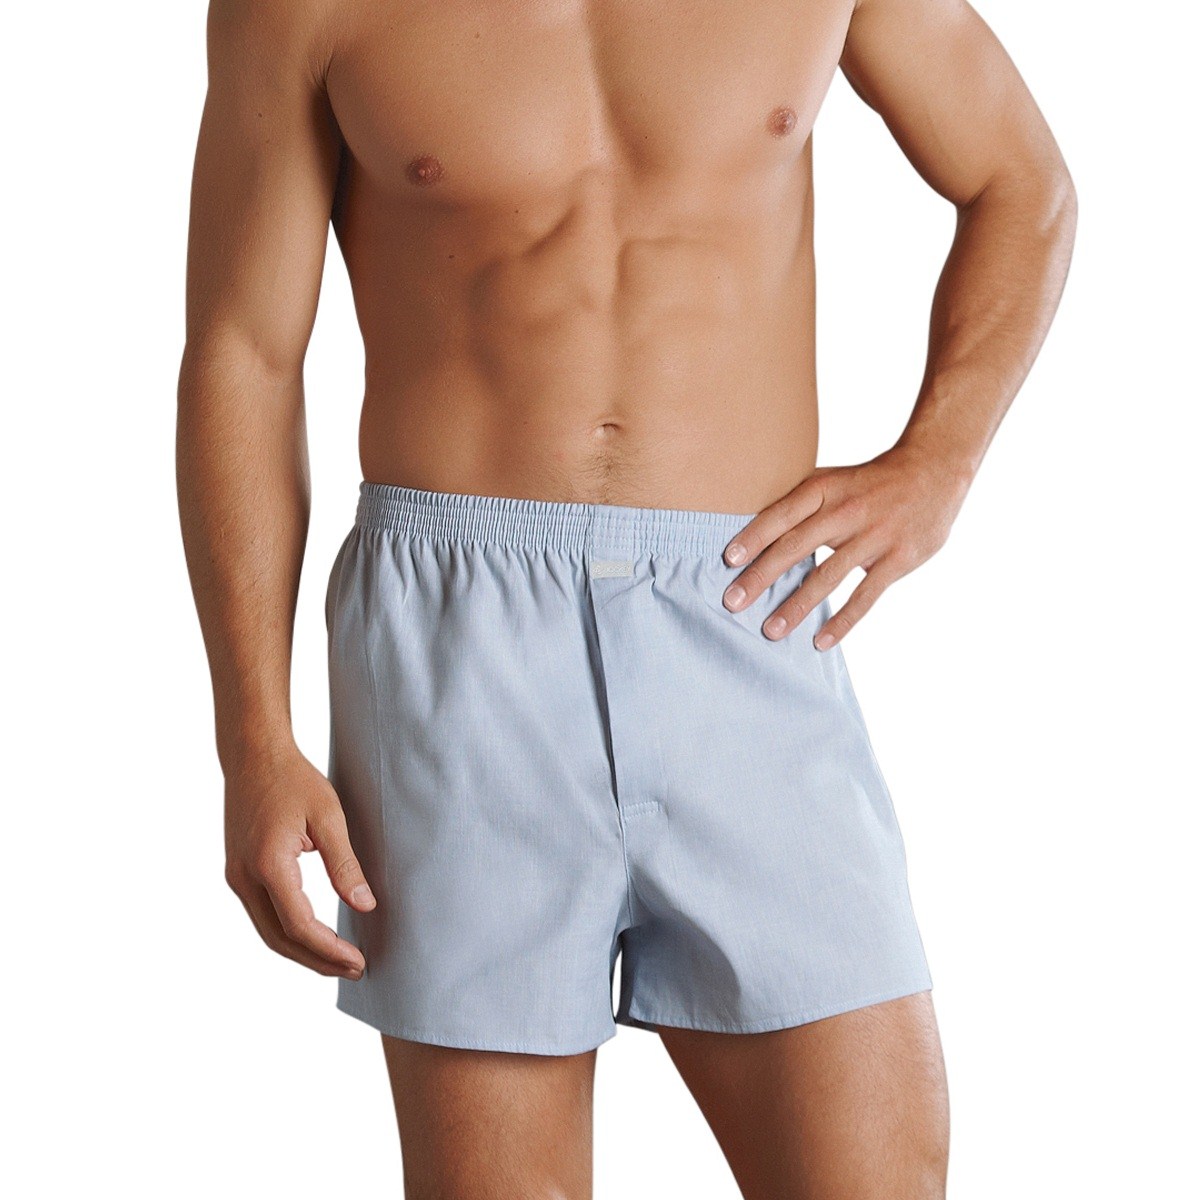 Jockey Woven Boxer Plain 313900 - Boxer shorts - Trunks - Underwear ...